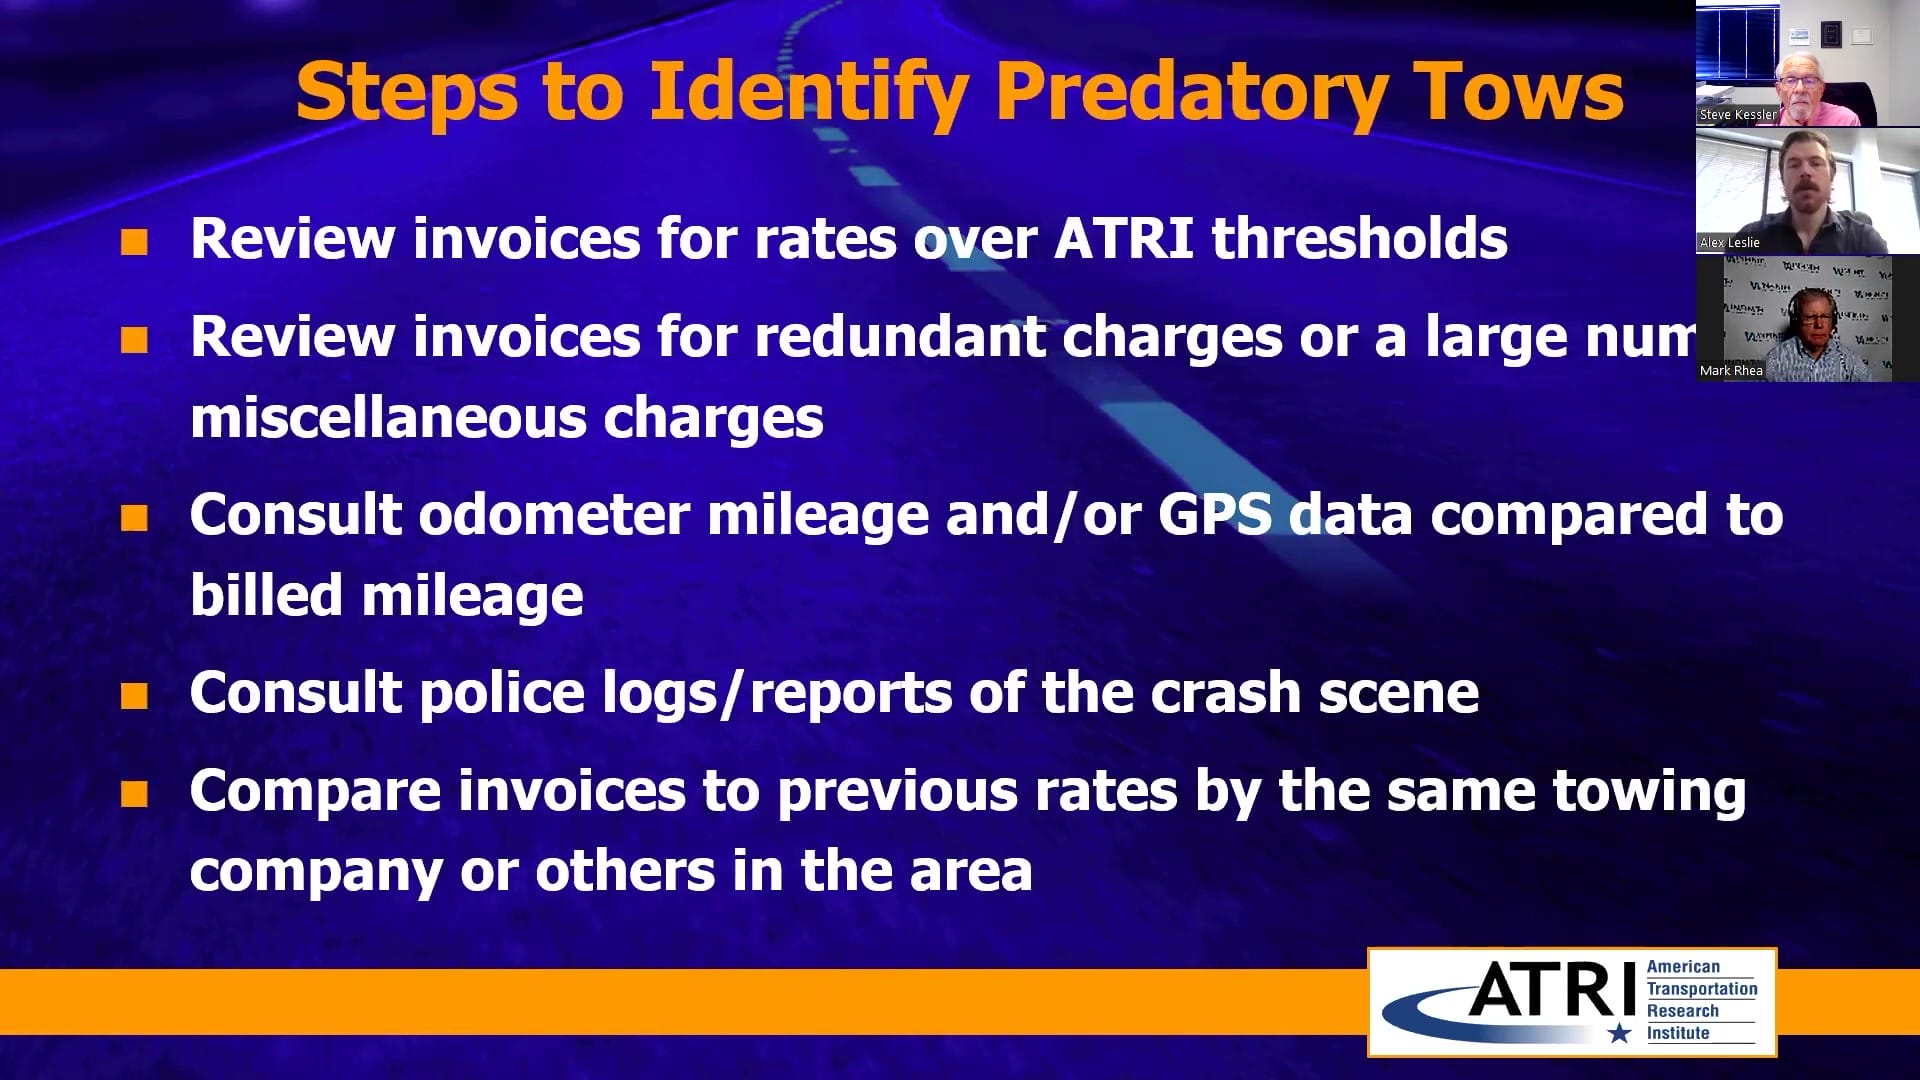 ATRI’s Research on Predatory Towing Steps to Identify Predatory Tows